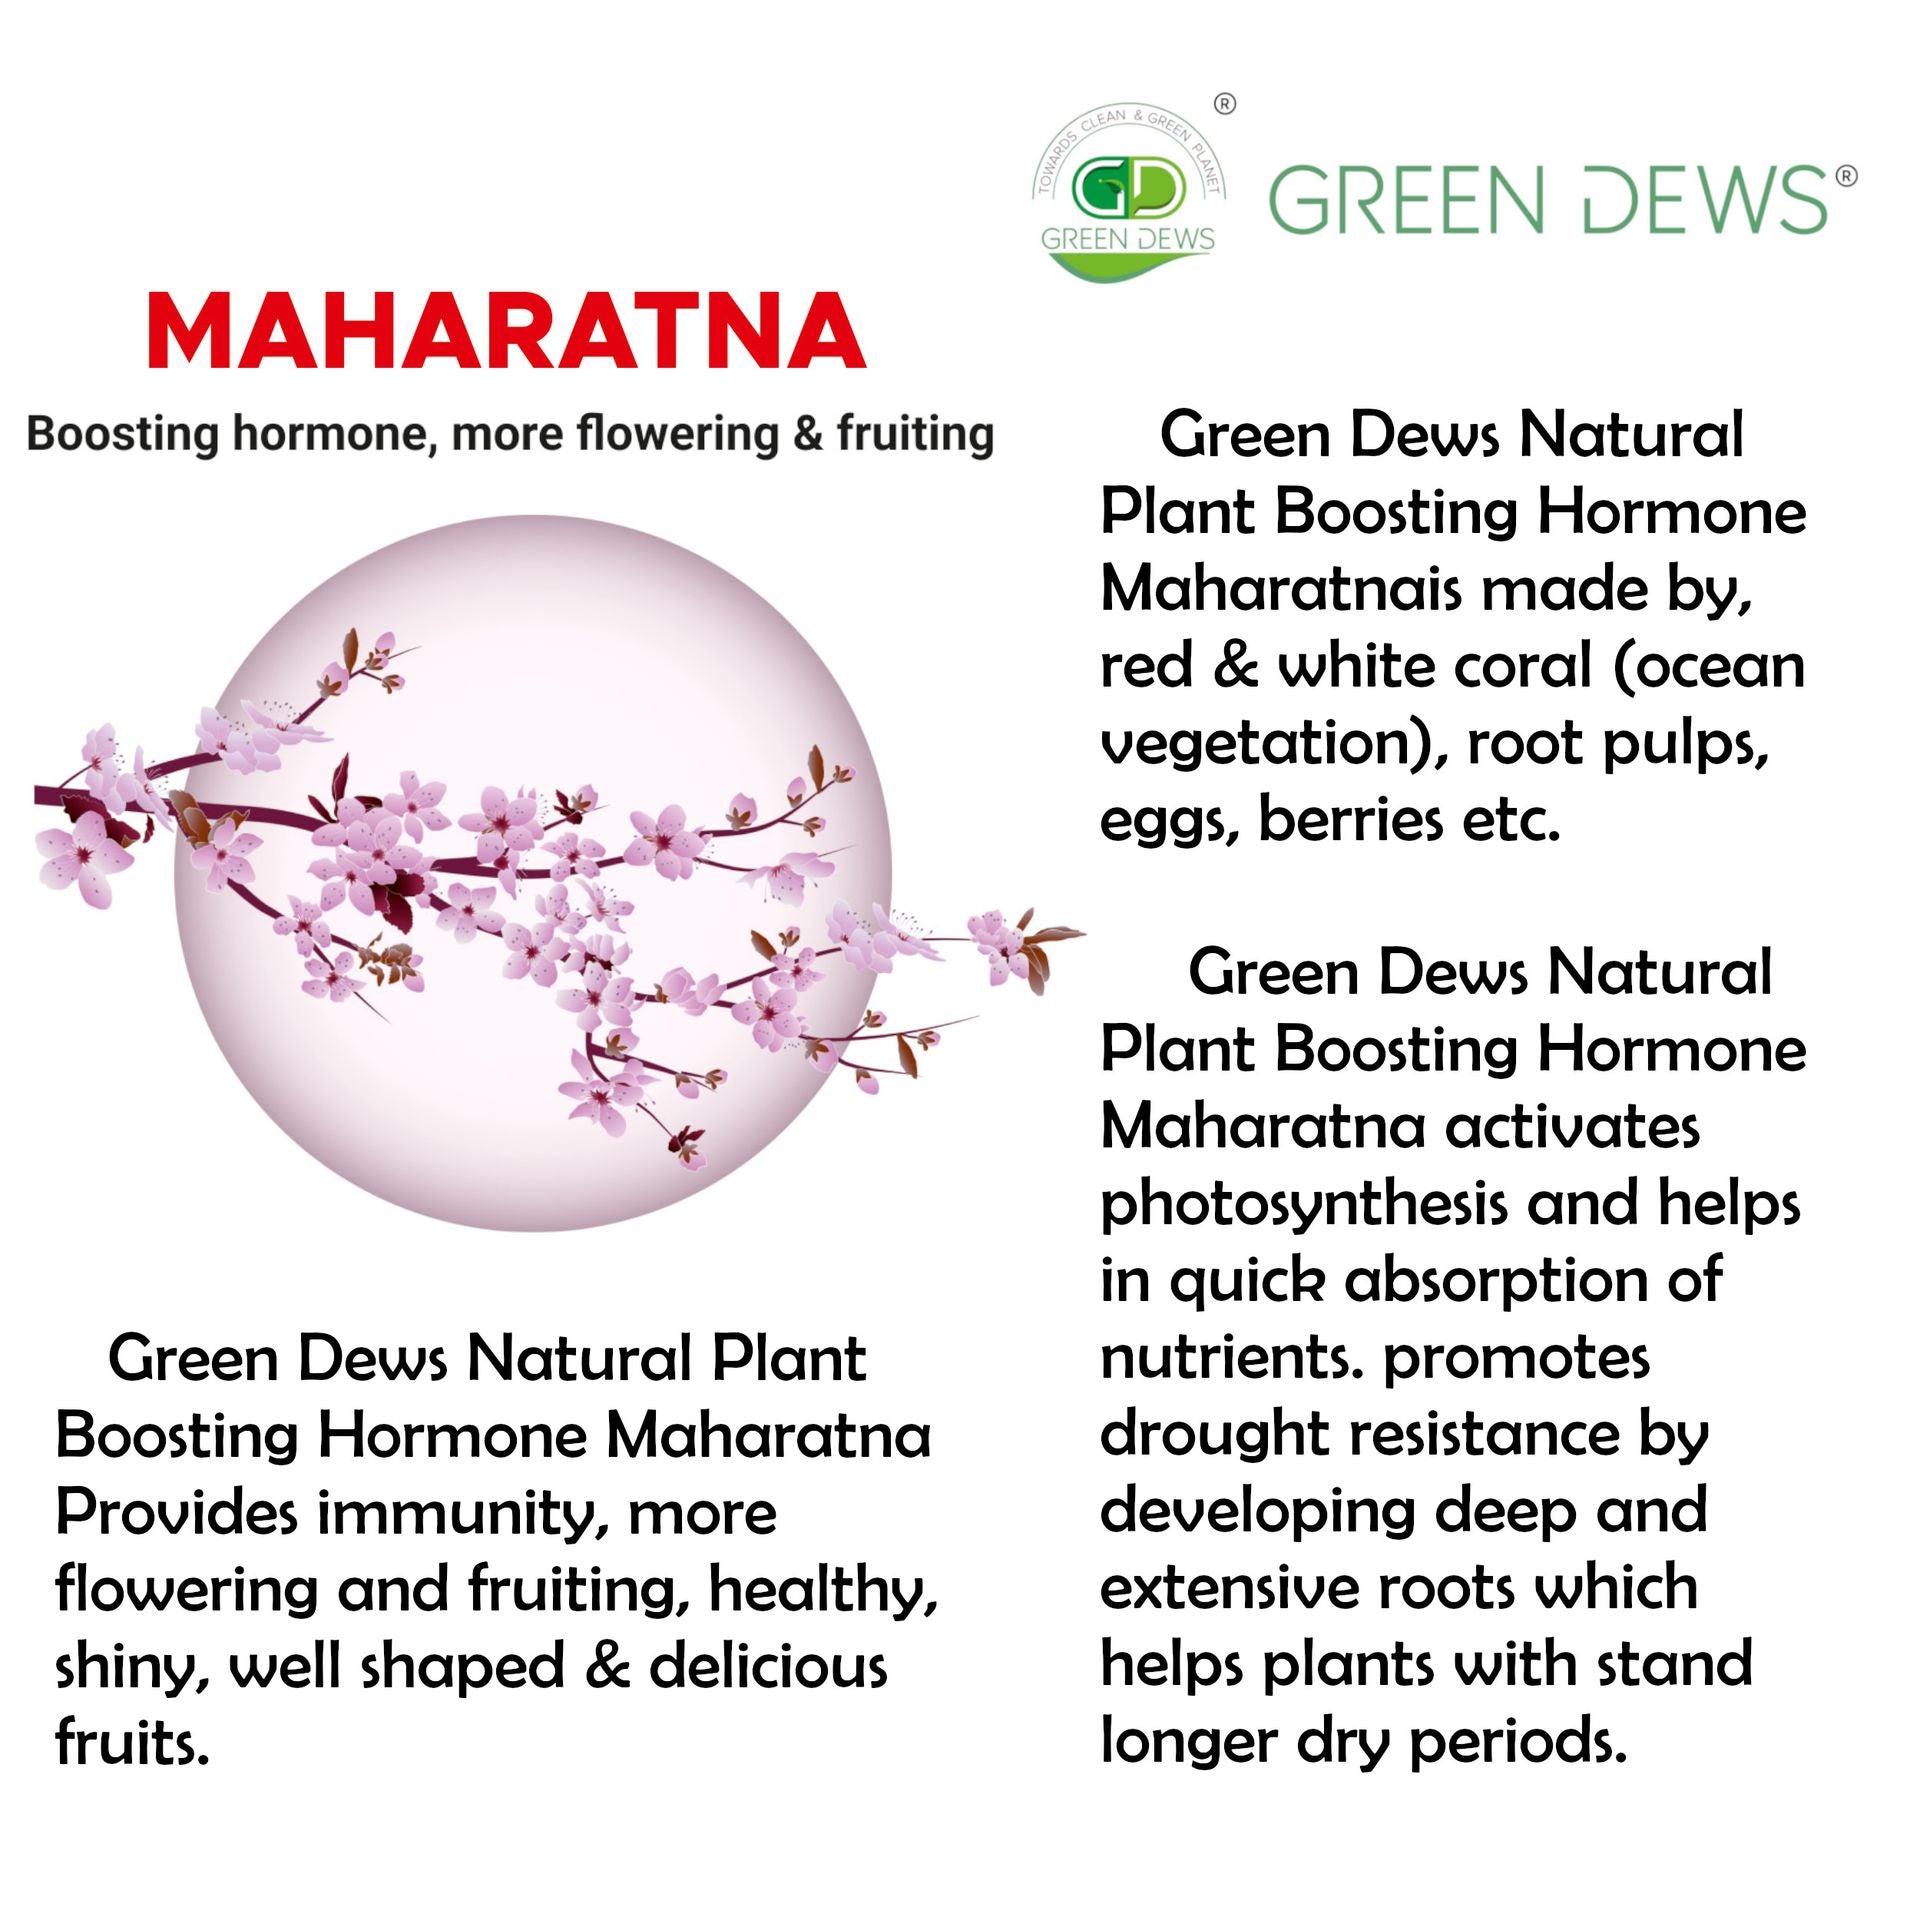 Green Dews Maharatna Plant Growth Promoter Immunity Booster More Flowering and Fruiting boosting fertilizer organic liquid - hfnl!fe